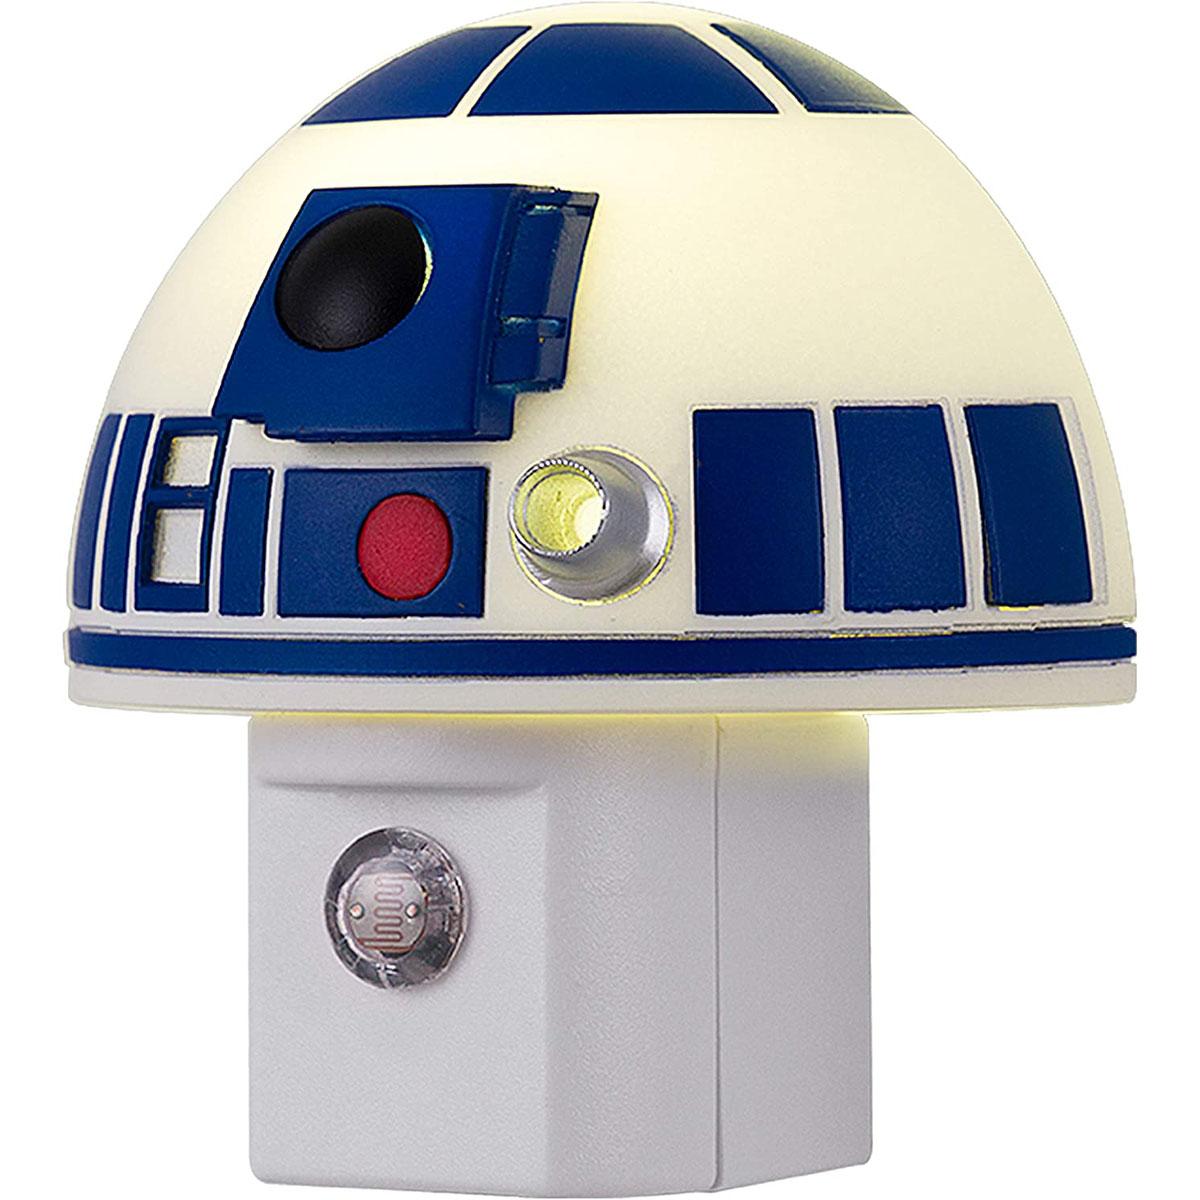 Star Wars Mini R2-D2 LED Night Light for $7.04